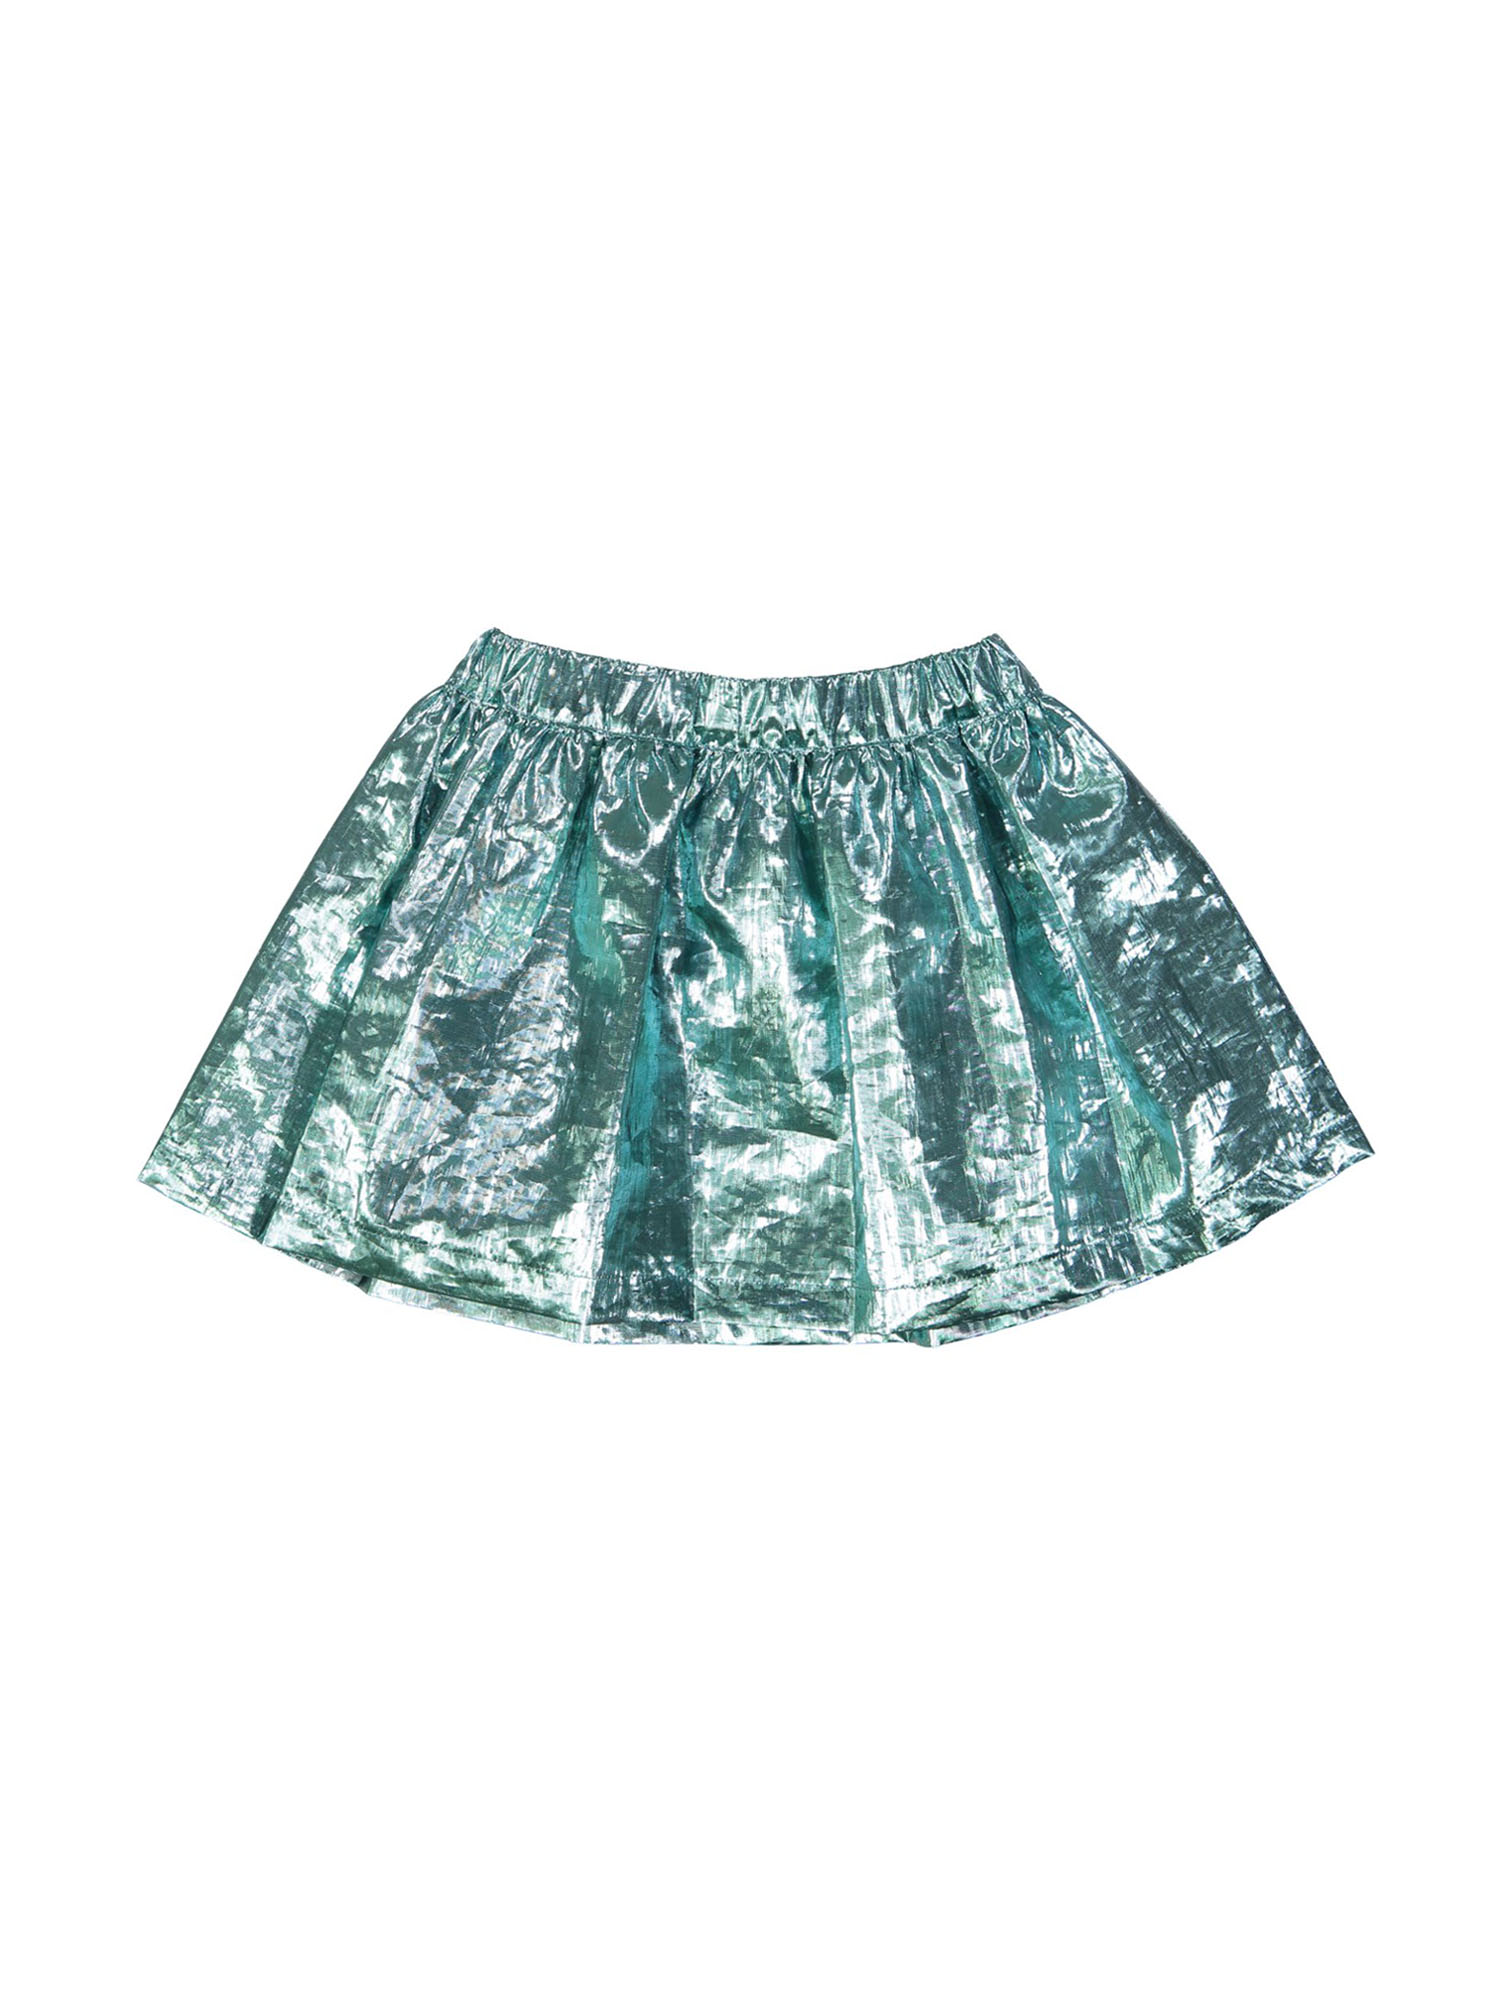 skirt metallic green